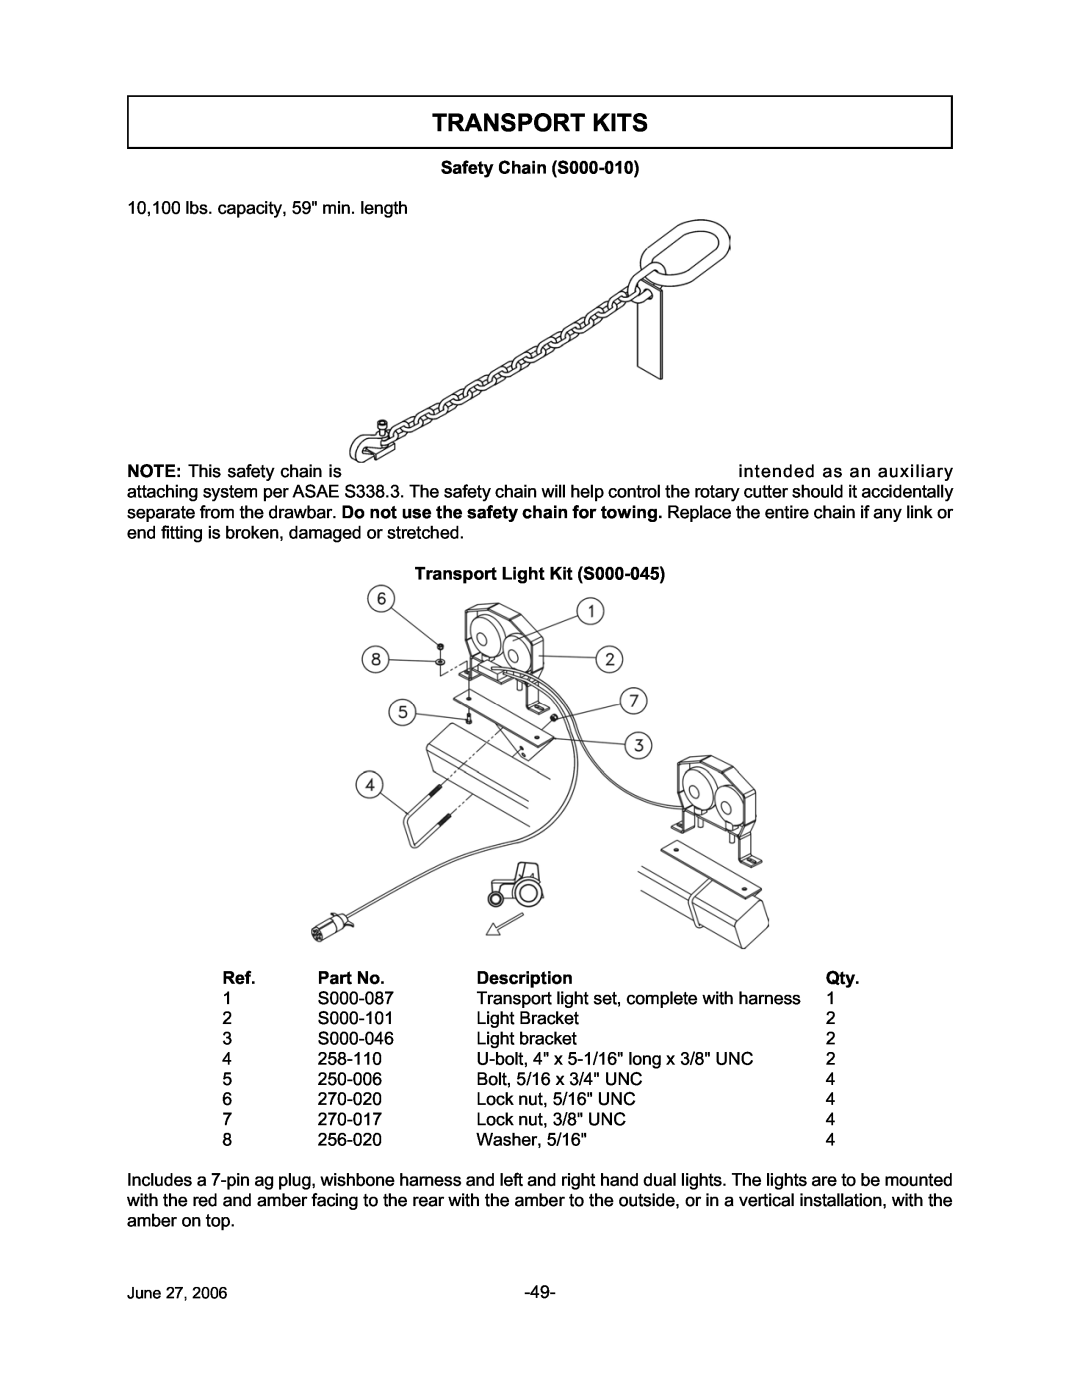 Tiger TWR-120, TWR-180 manual Transport Kits, Safety Chain S000-010, Transport Light Kit S000-045, Description 